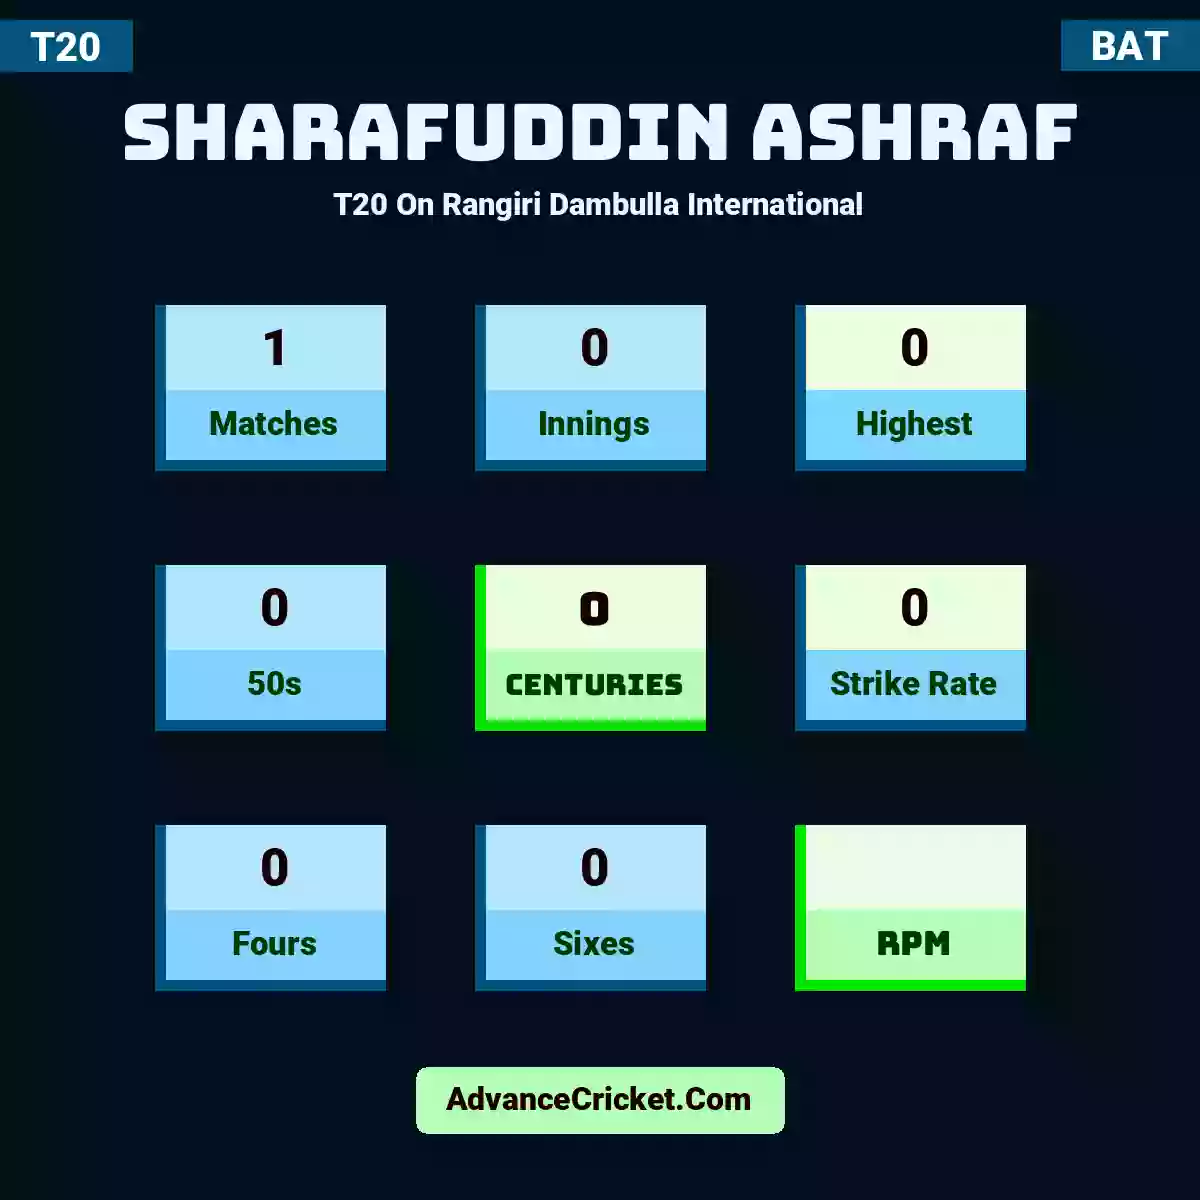 Sharafuddin Ashraf T20  On Rangiri Dambulla International, Sharafuddin Ashraf played 1 matches, scored 0 runs as highest, 0 half-centuries, and 0 centuries, with a strike rate of 0. S.Ashraf hit 0 fours and 0 sixes.